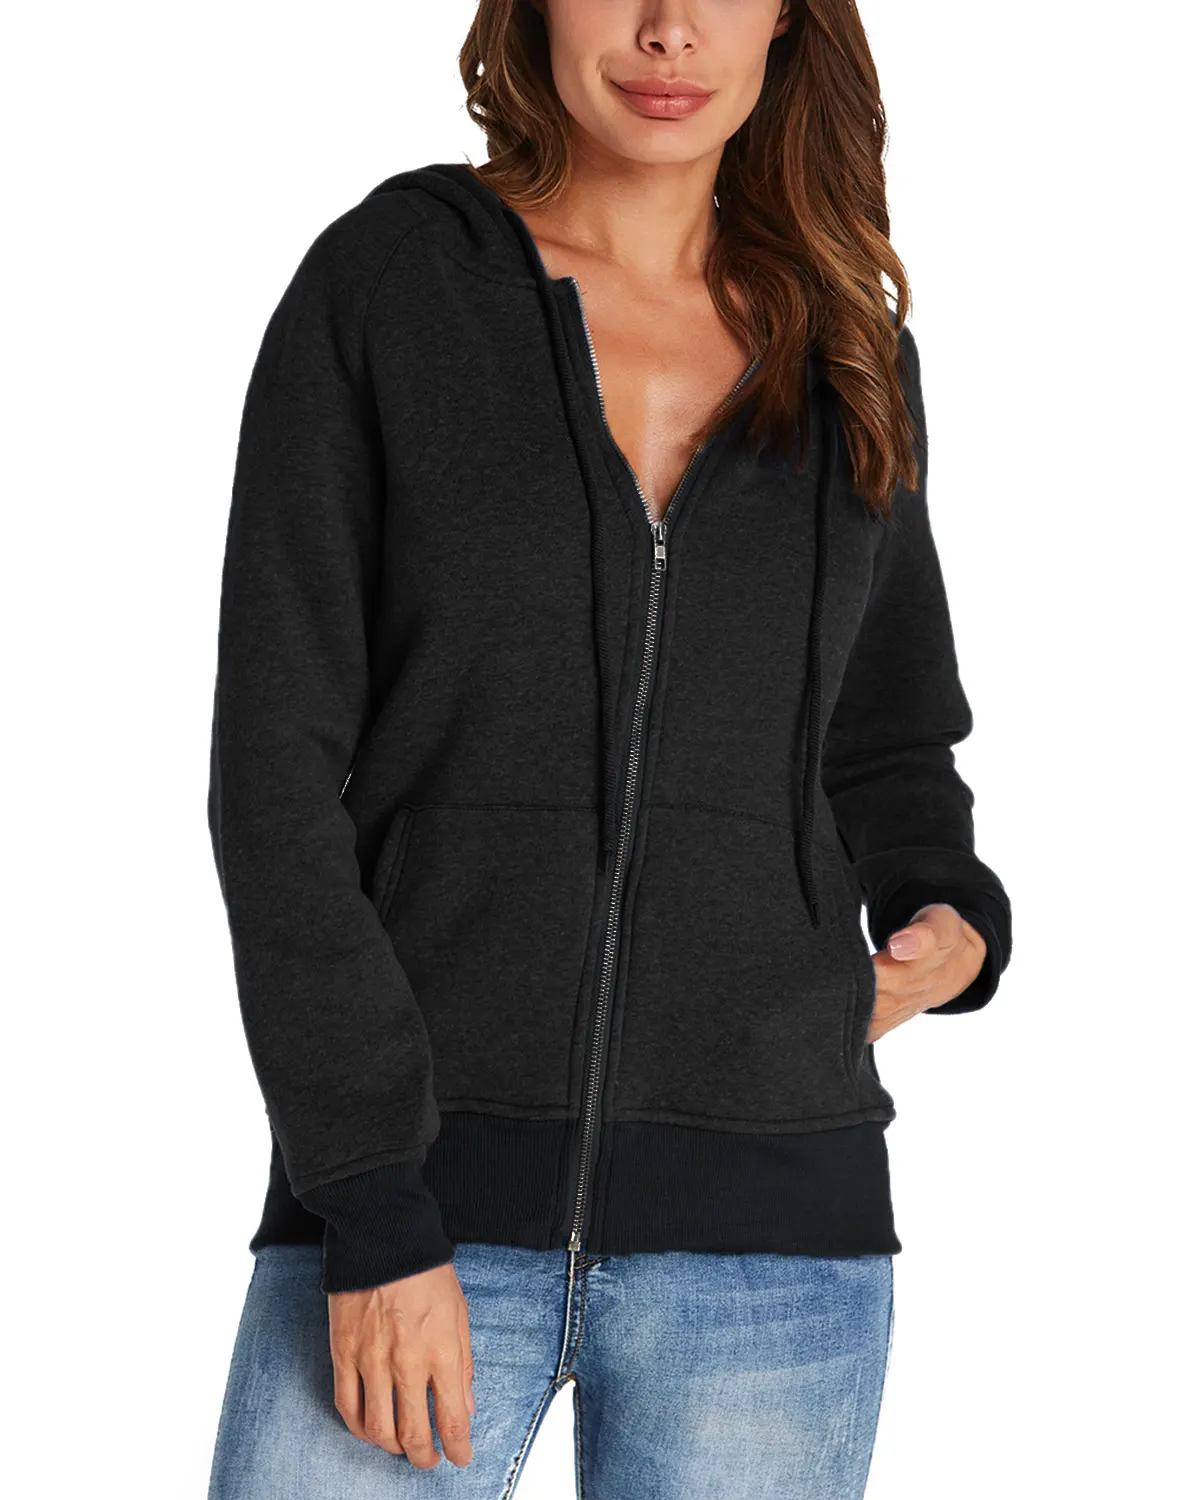  Autumn Women Casual Hoodies Sweatshirt Loose Long Sleeve Solid Color Hooded Sweatshirt Big Size Zip